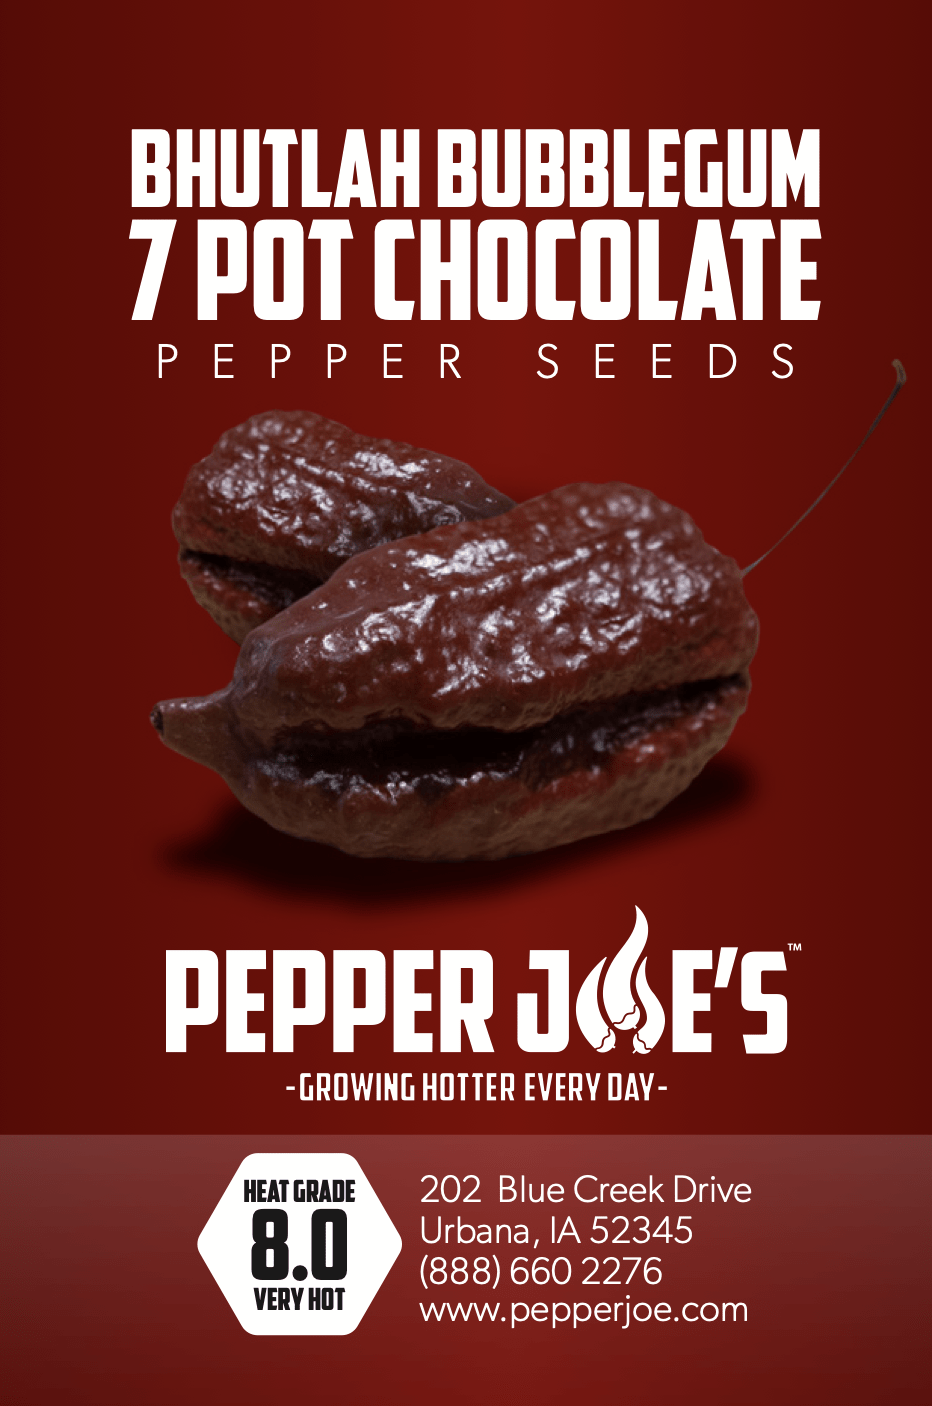 Pepper joe's bhutlah bubblegum chocolate pepper